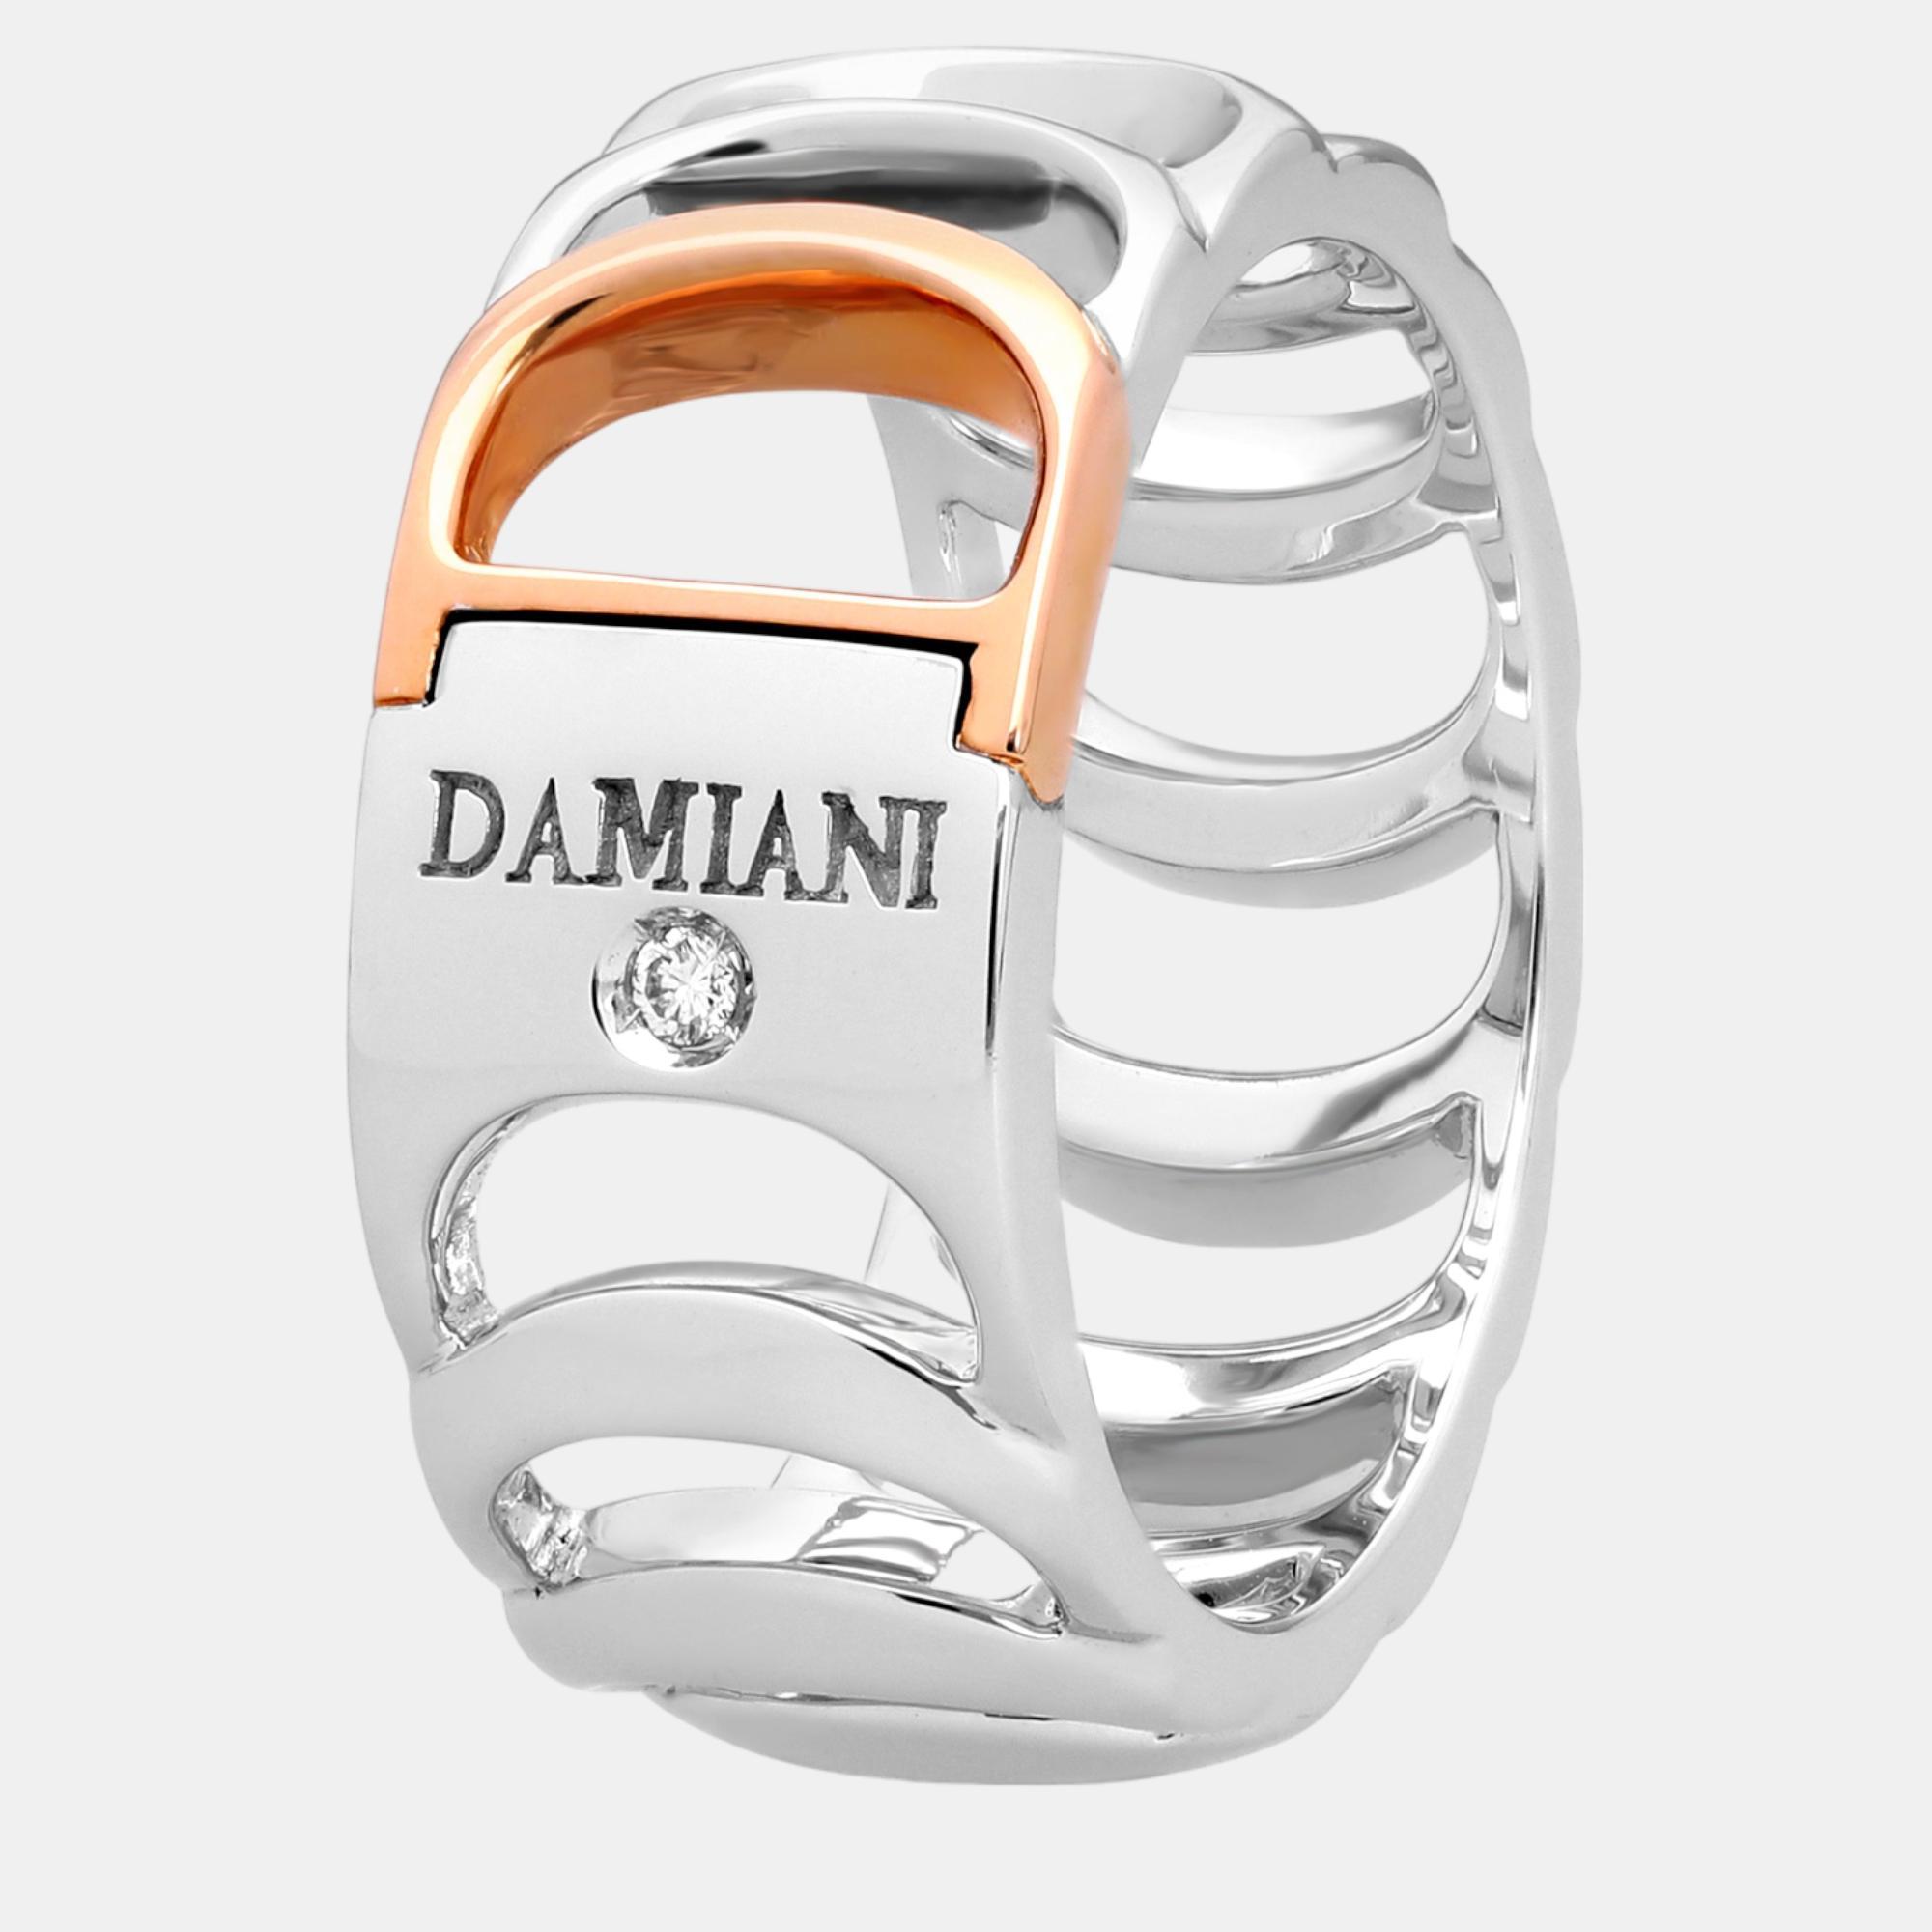 Damiani 18k white gold and 18k rose gold, diamond band ring